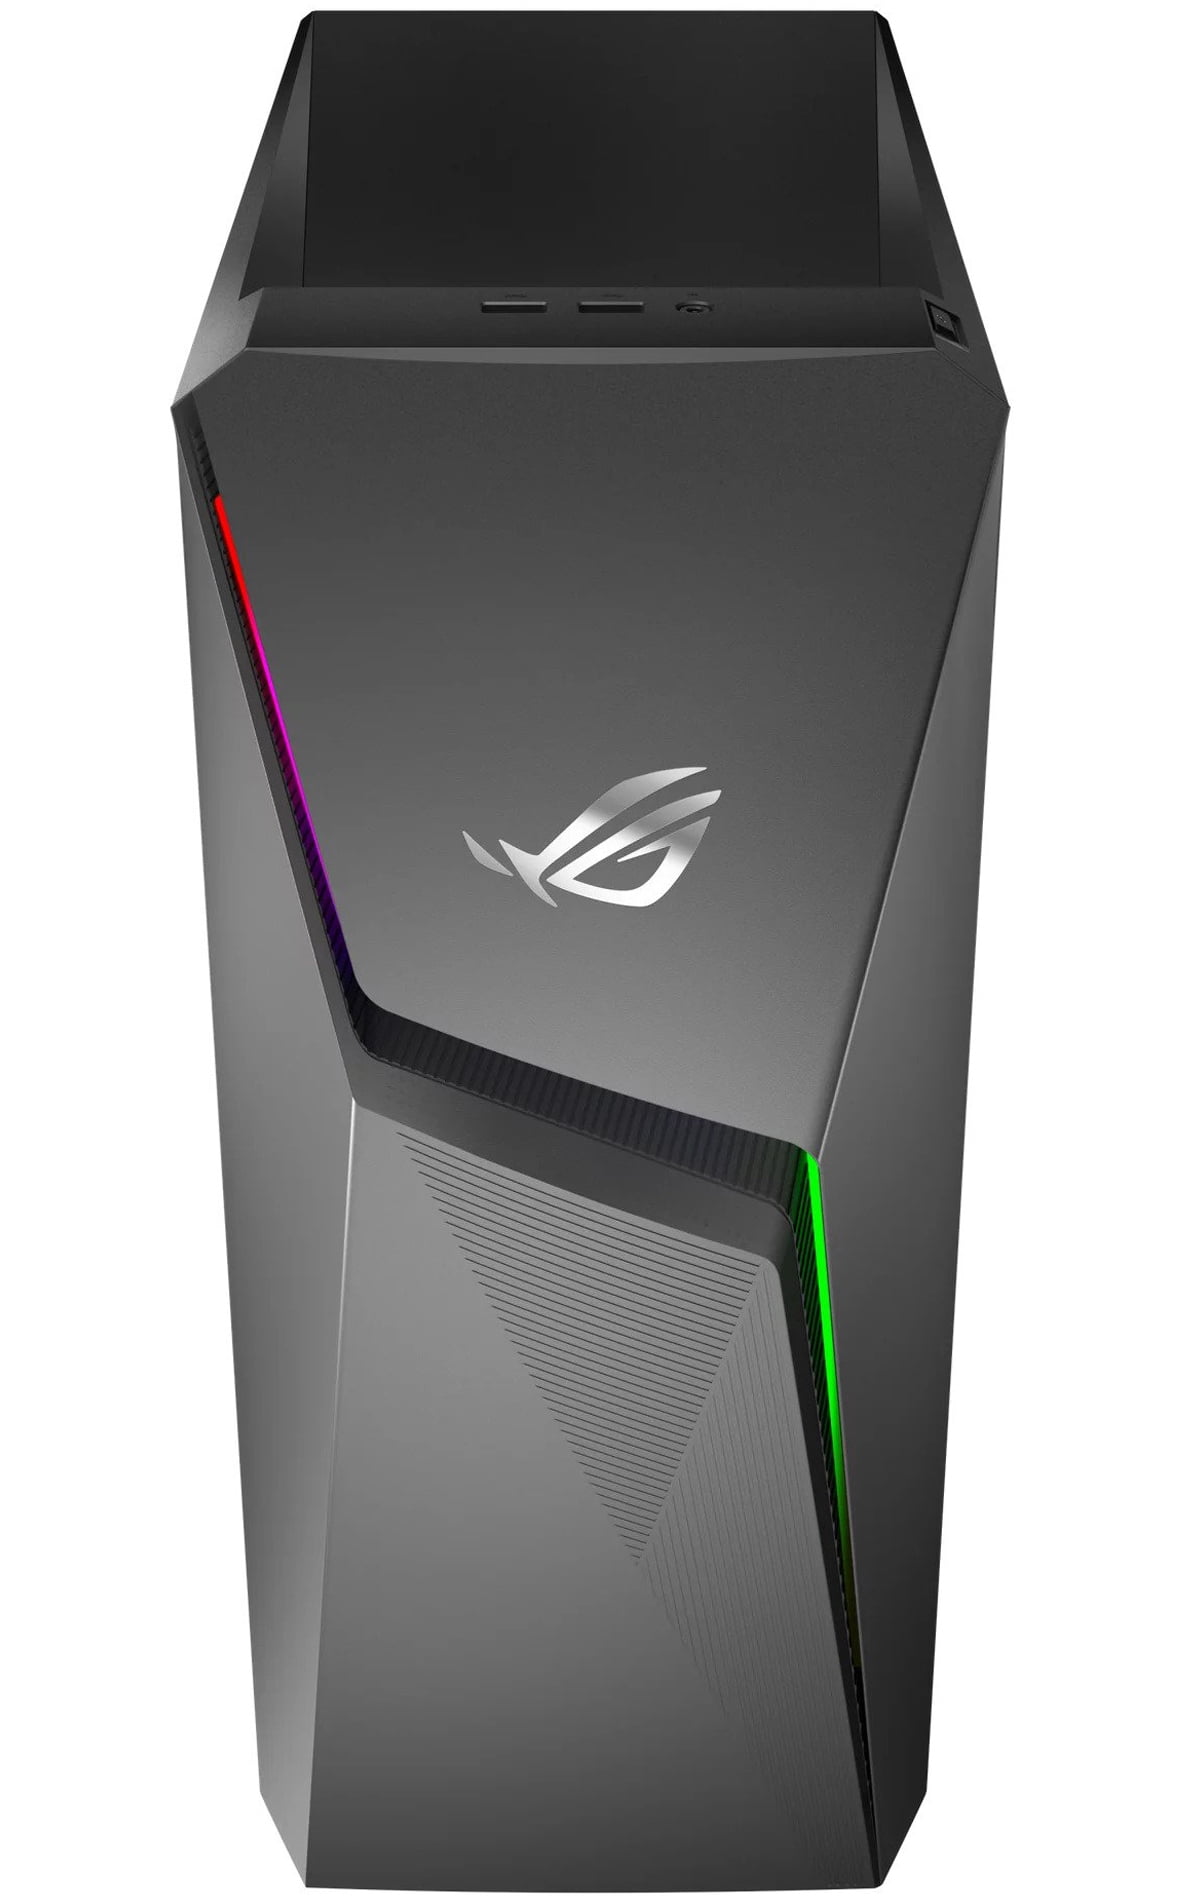 ASUS ROG Strix G10DK Gaming Desktop PC (AMD Ryzen 5 3600X 6-Core